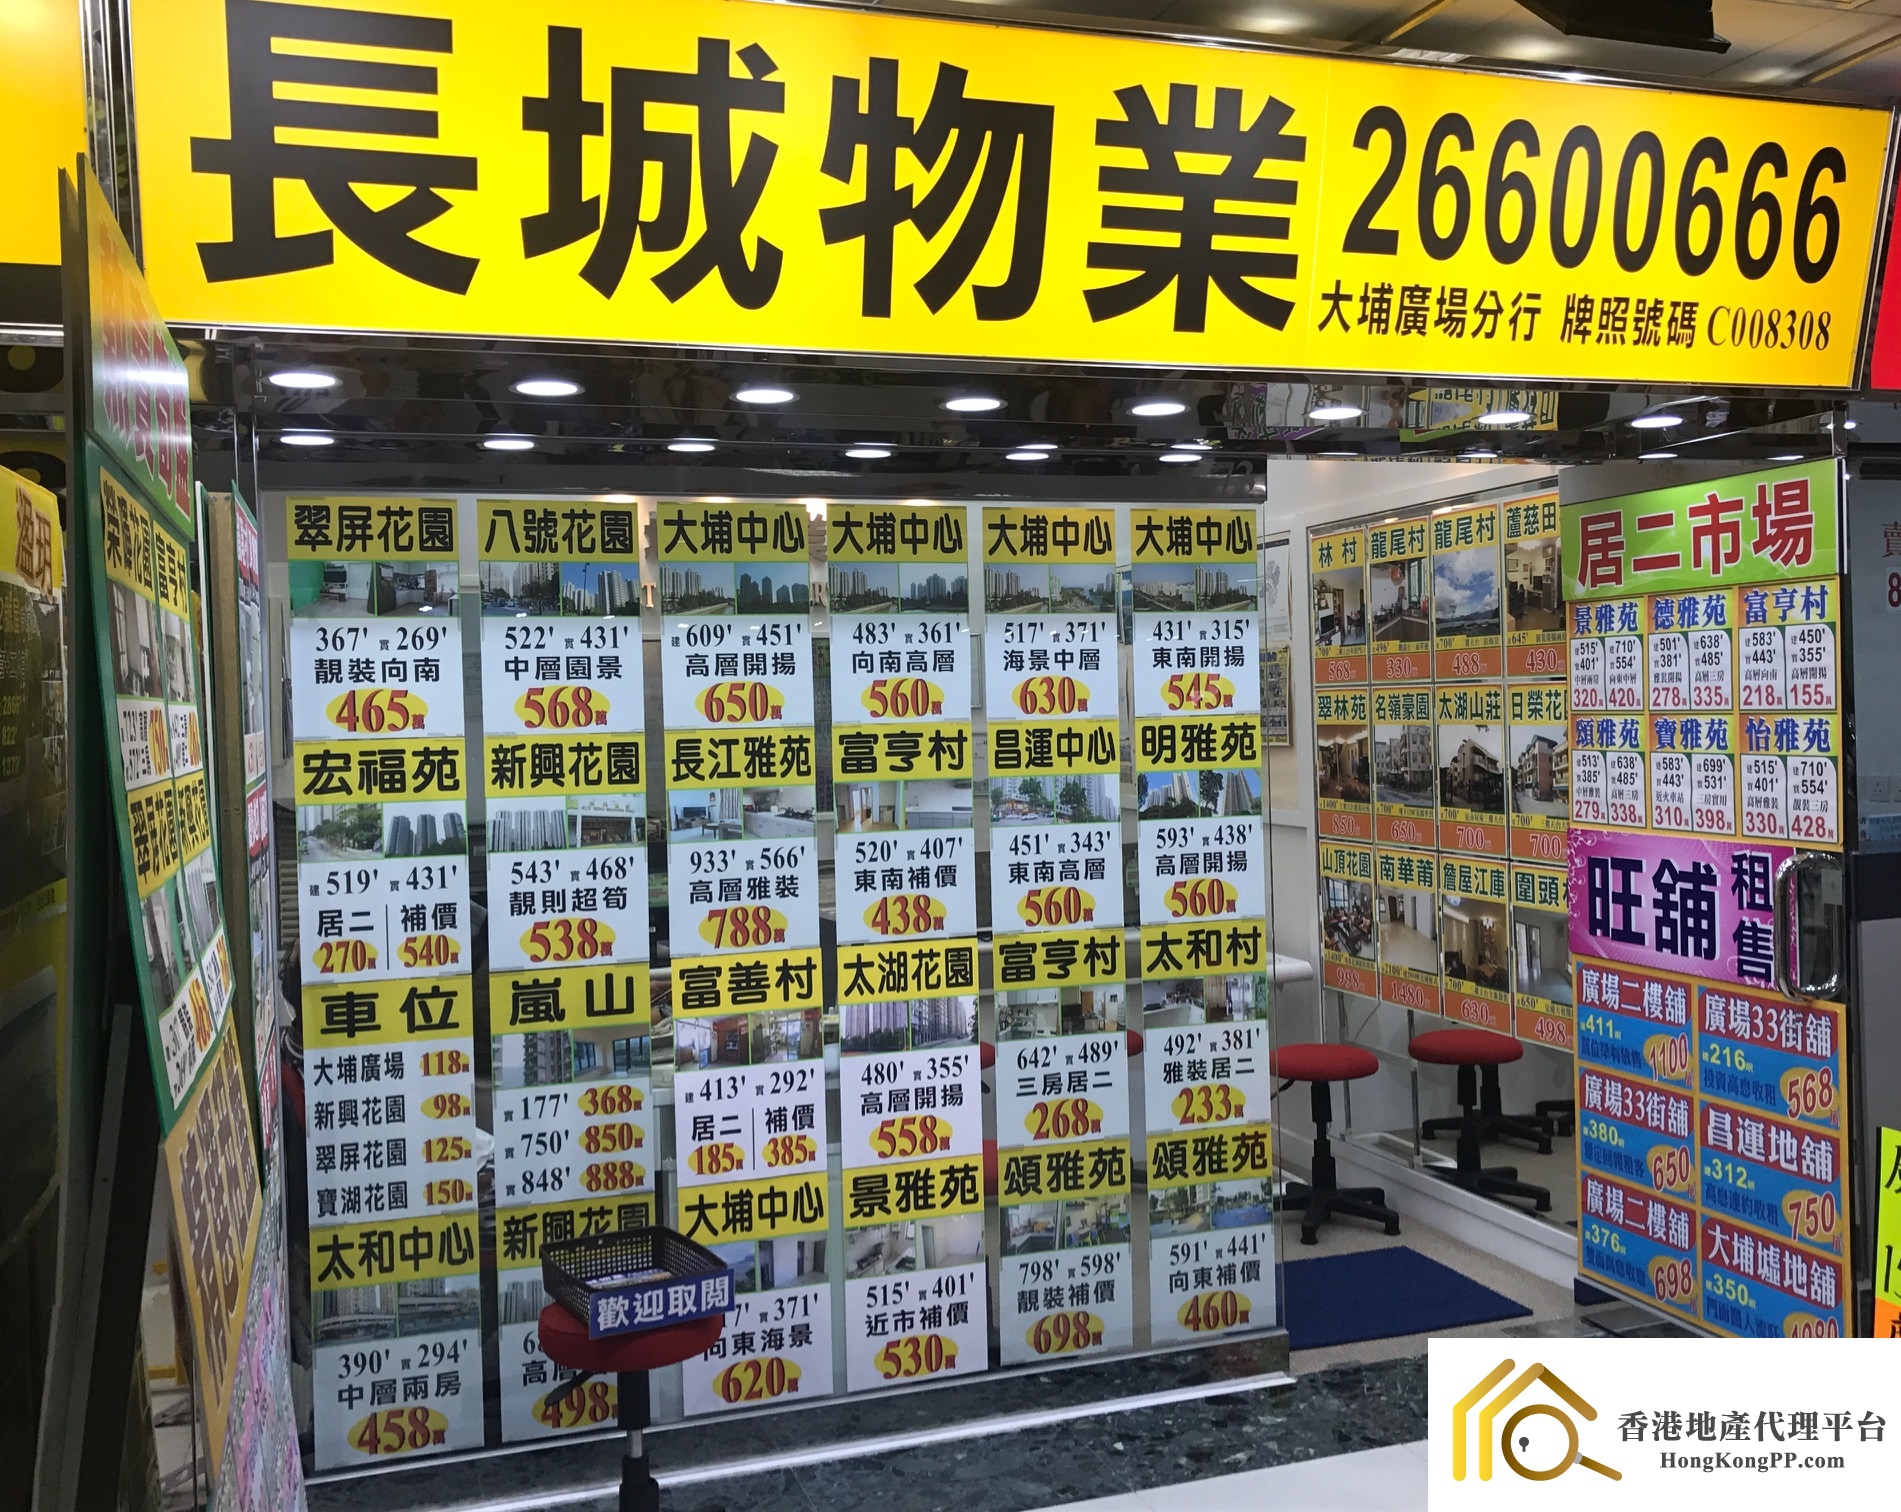 ShopEstate Agent: 長城物業 Great Wall Property Agency (運頭塘)